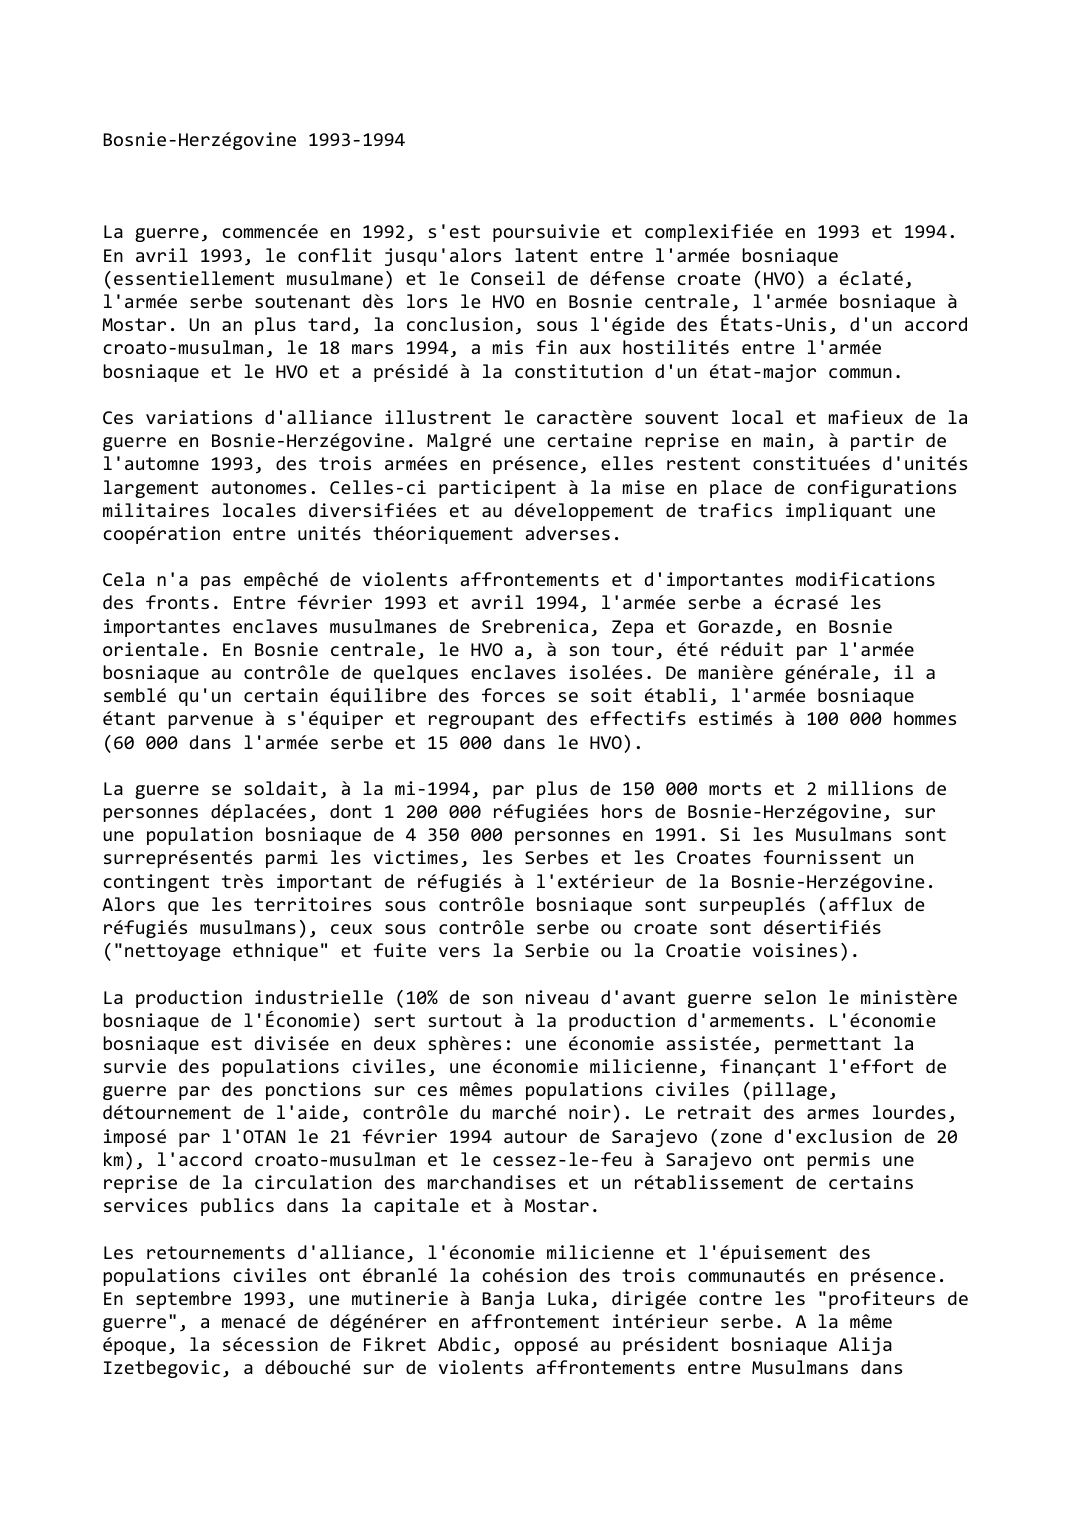 Prévisualisation du document Bosnie-Herzégovine (1993-1994)